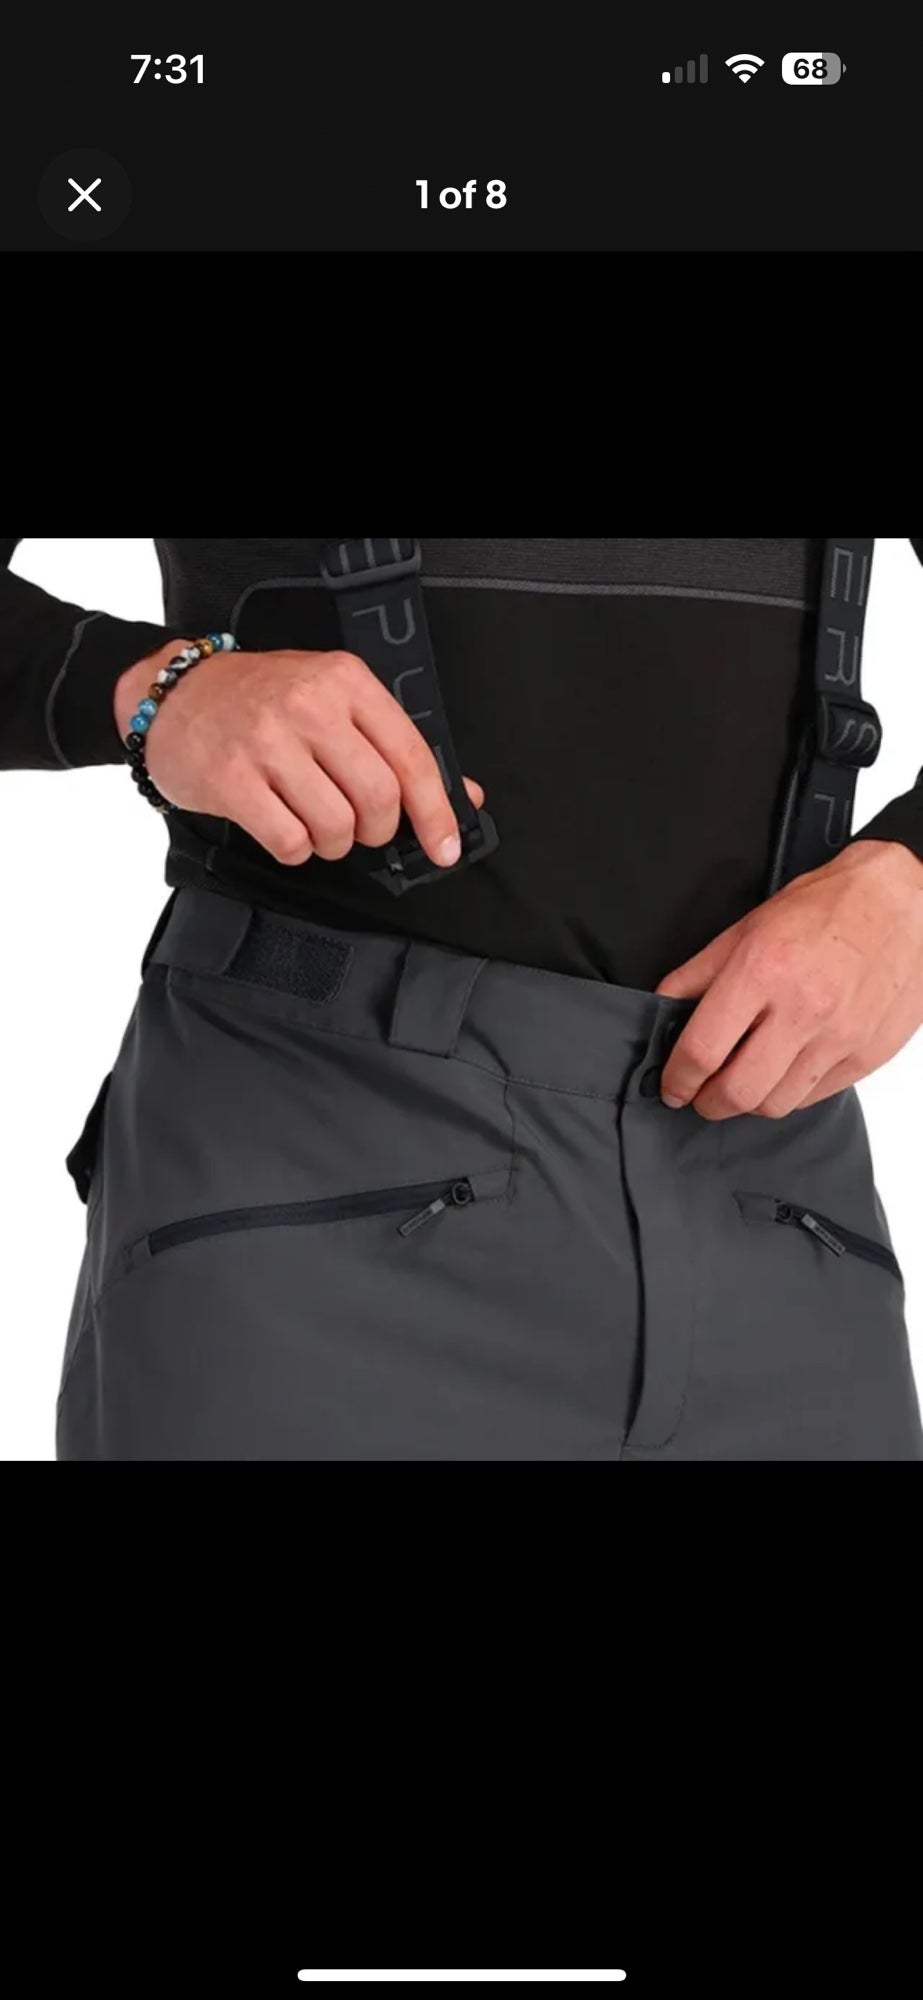 Spyder Sentinel Gore-Tex Men's insulated Ski Pants Bib. Gray L-R